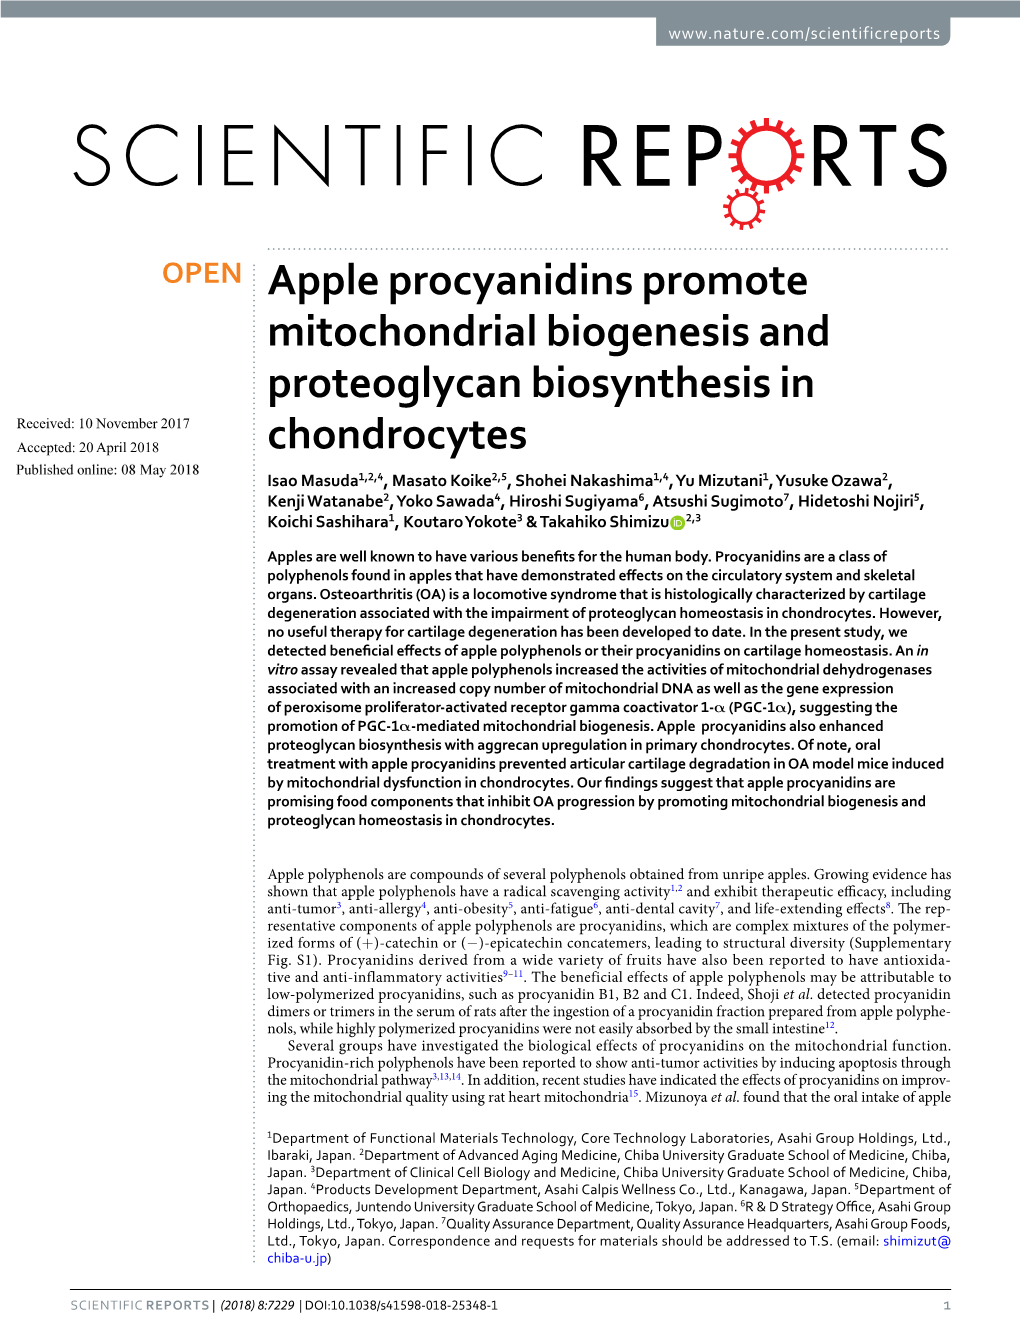 Apple Procyanidins Promote Mitochondrial Biogenesis And